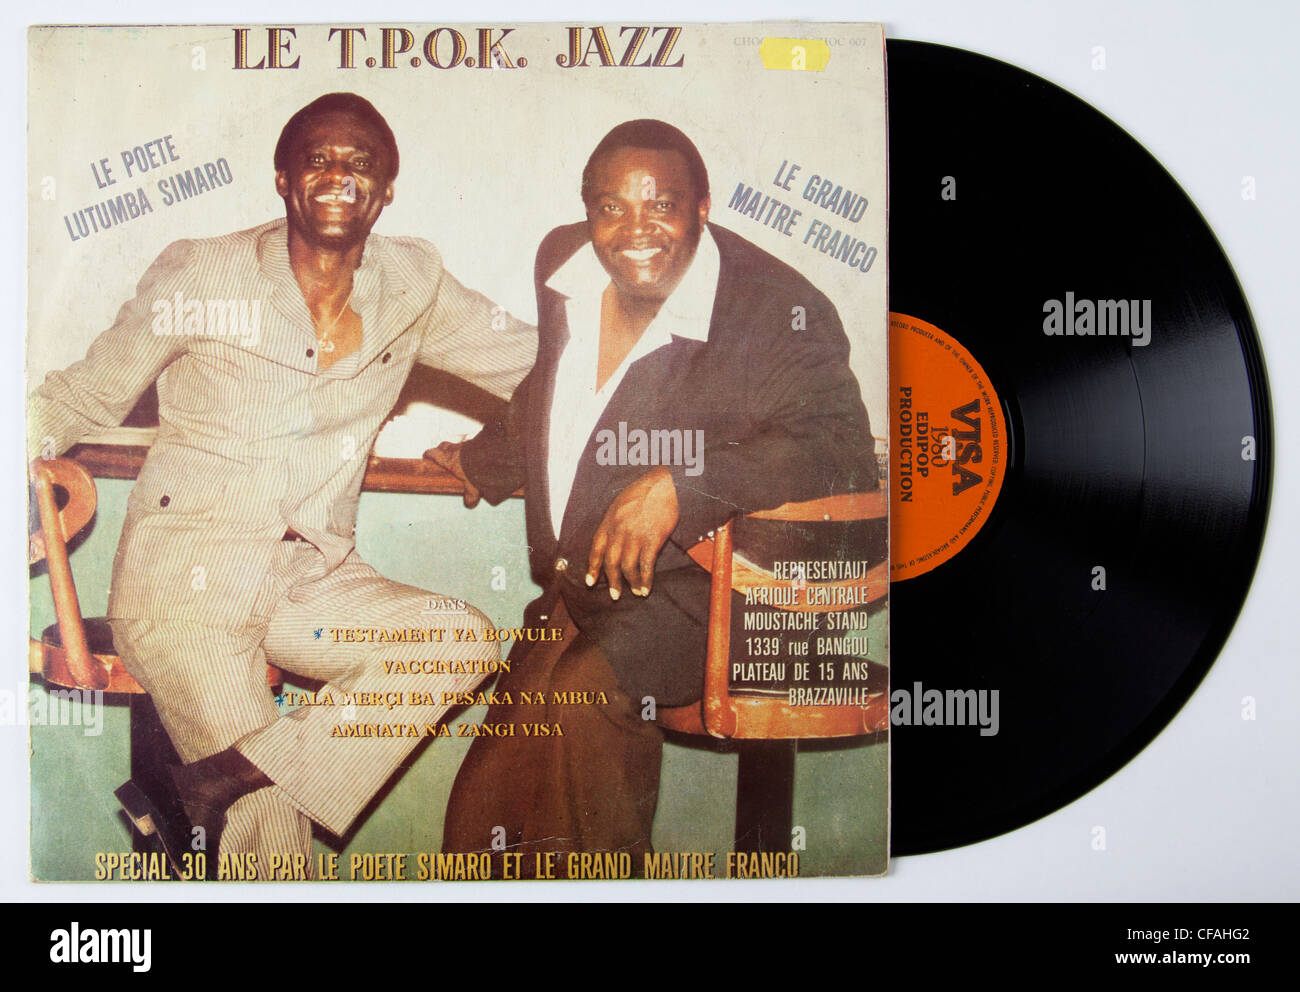 Franco et le T.P.O.K Jazz record cover Stock Photo